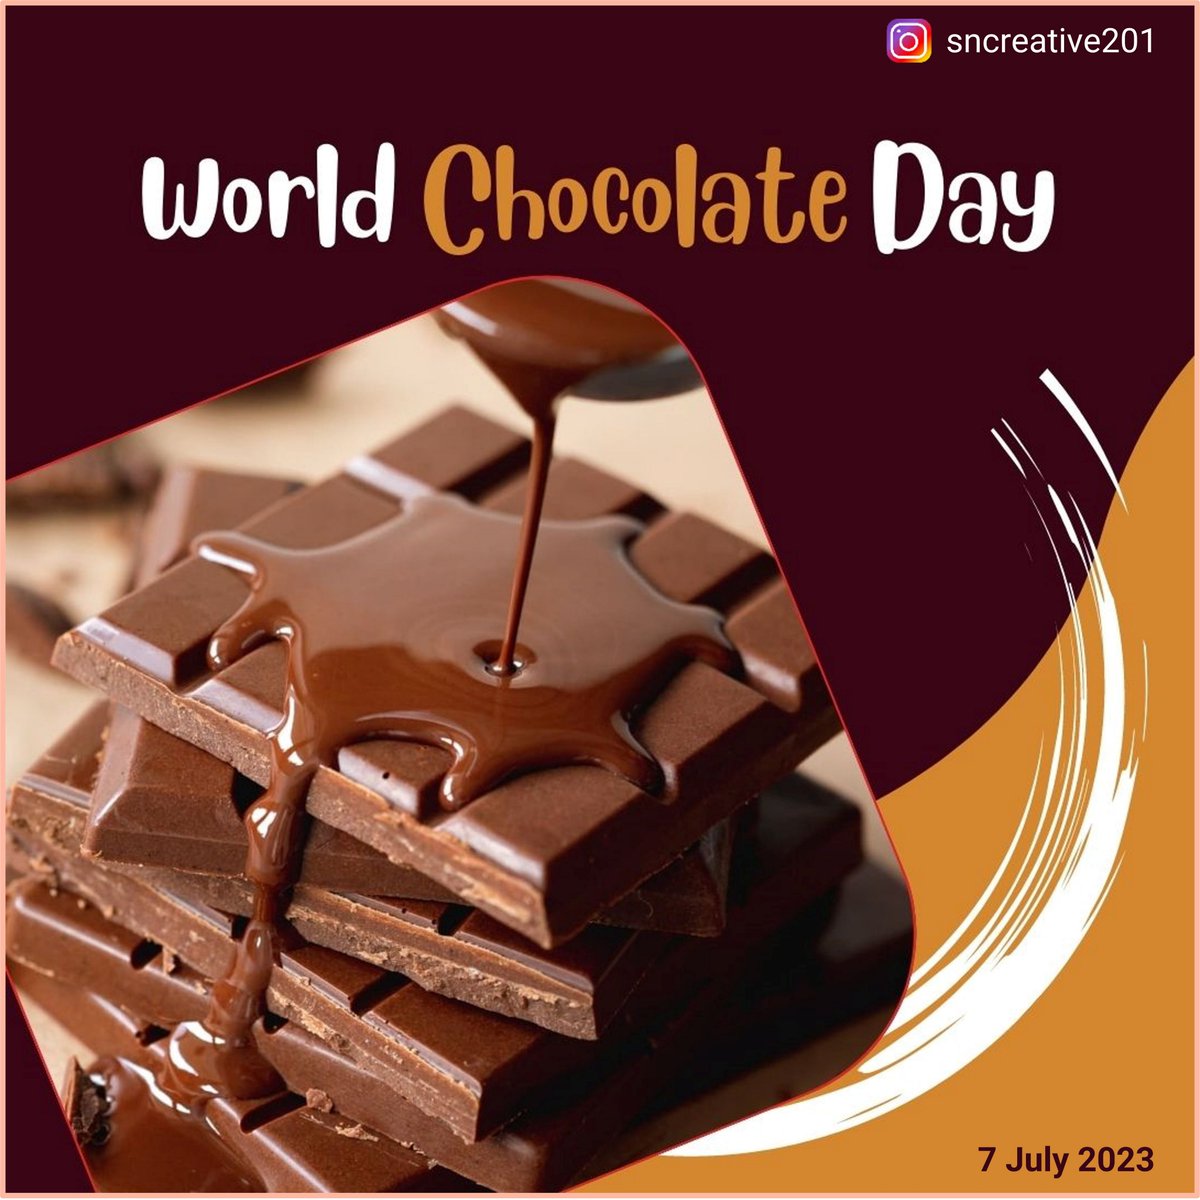 Happy Chocolate Day!

#worldchocolateday #dessert #desserttable #desserts #chocolate #chocolateday #chocolatelover